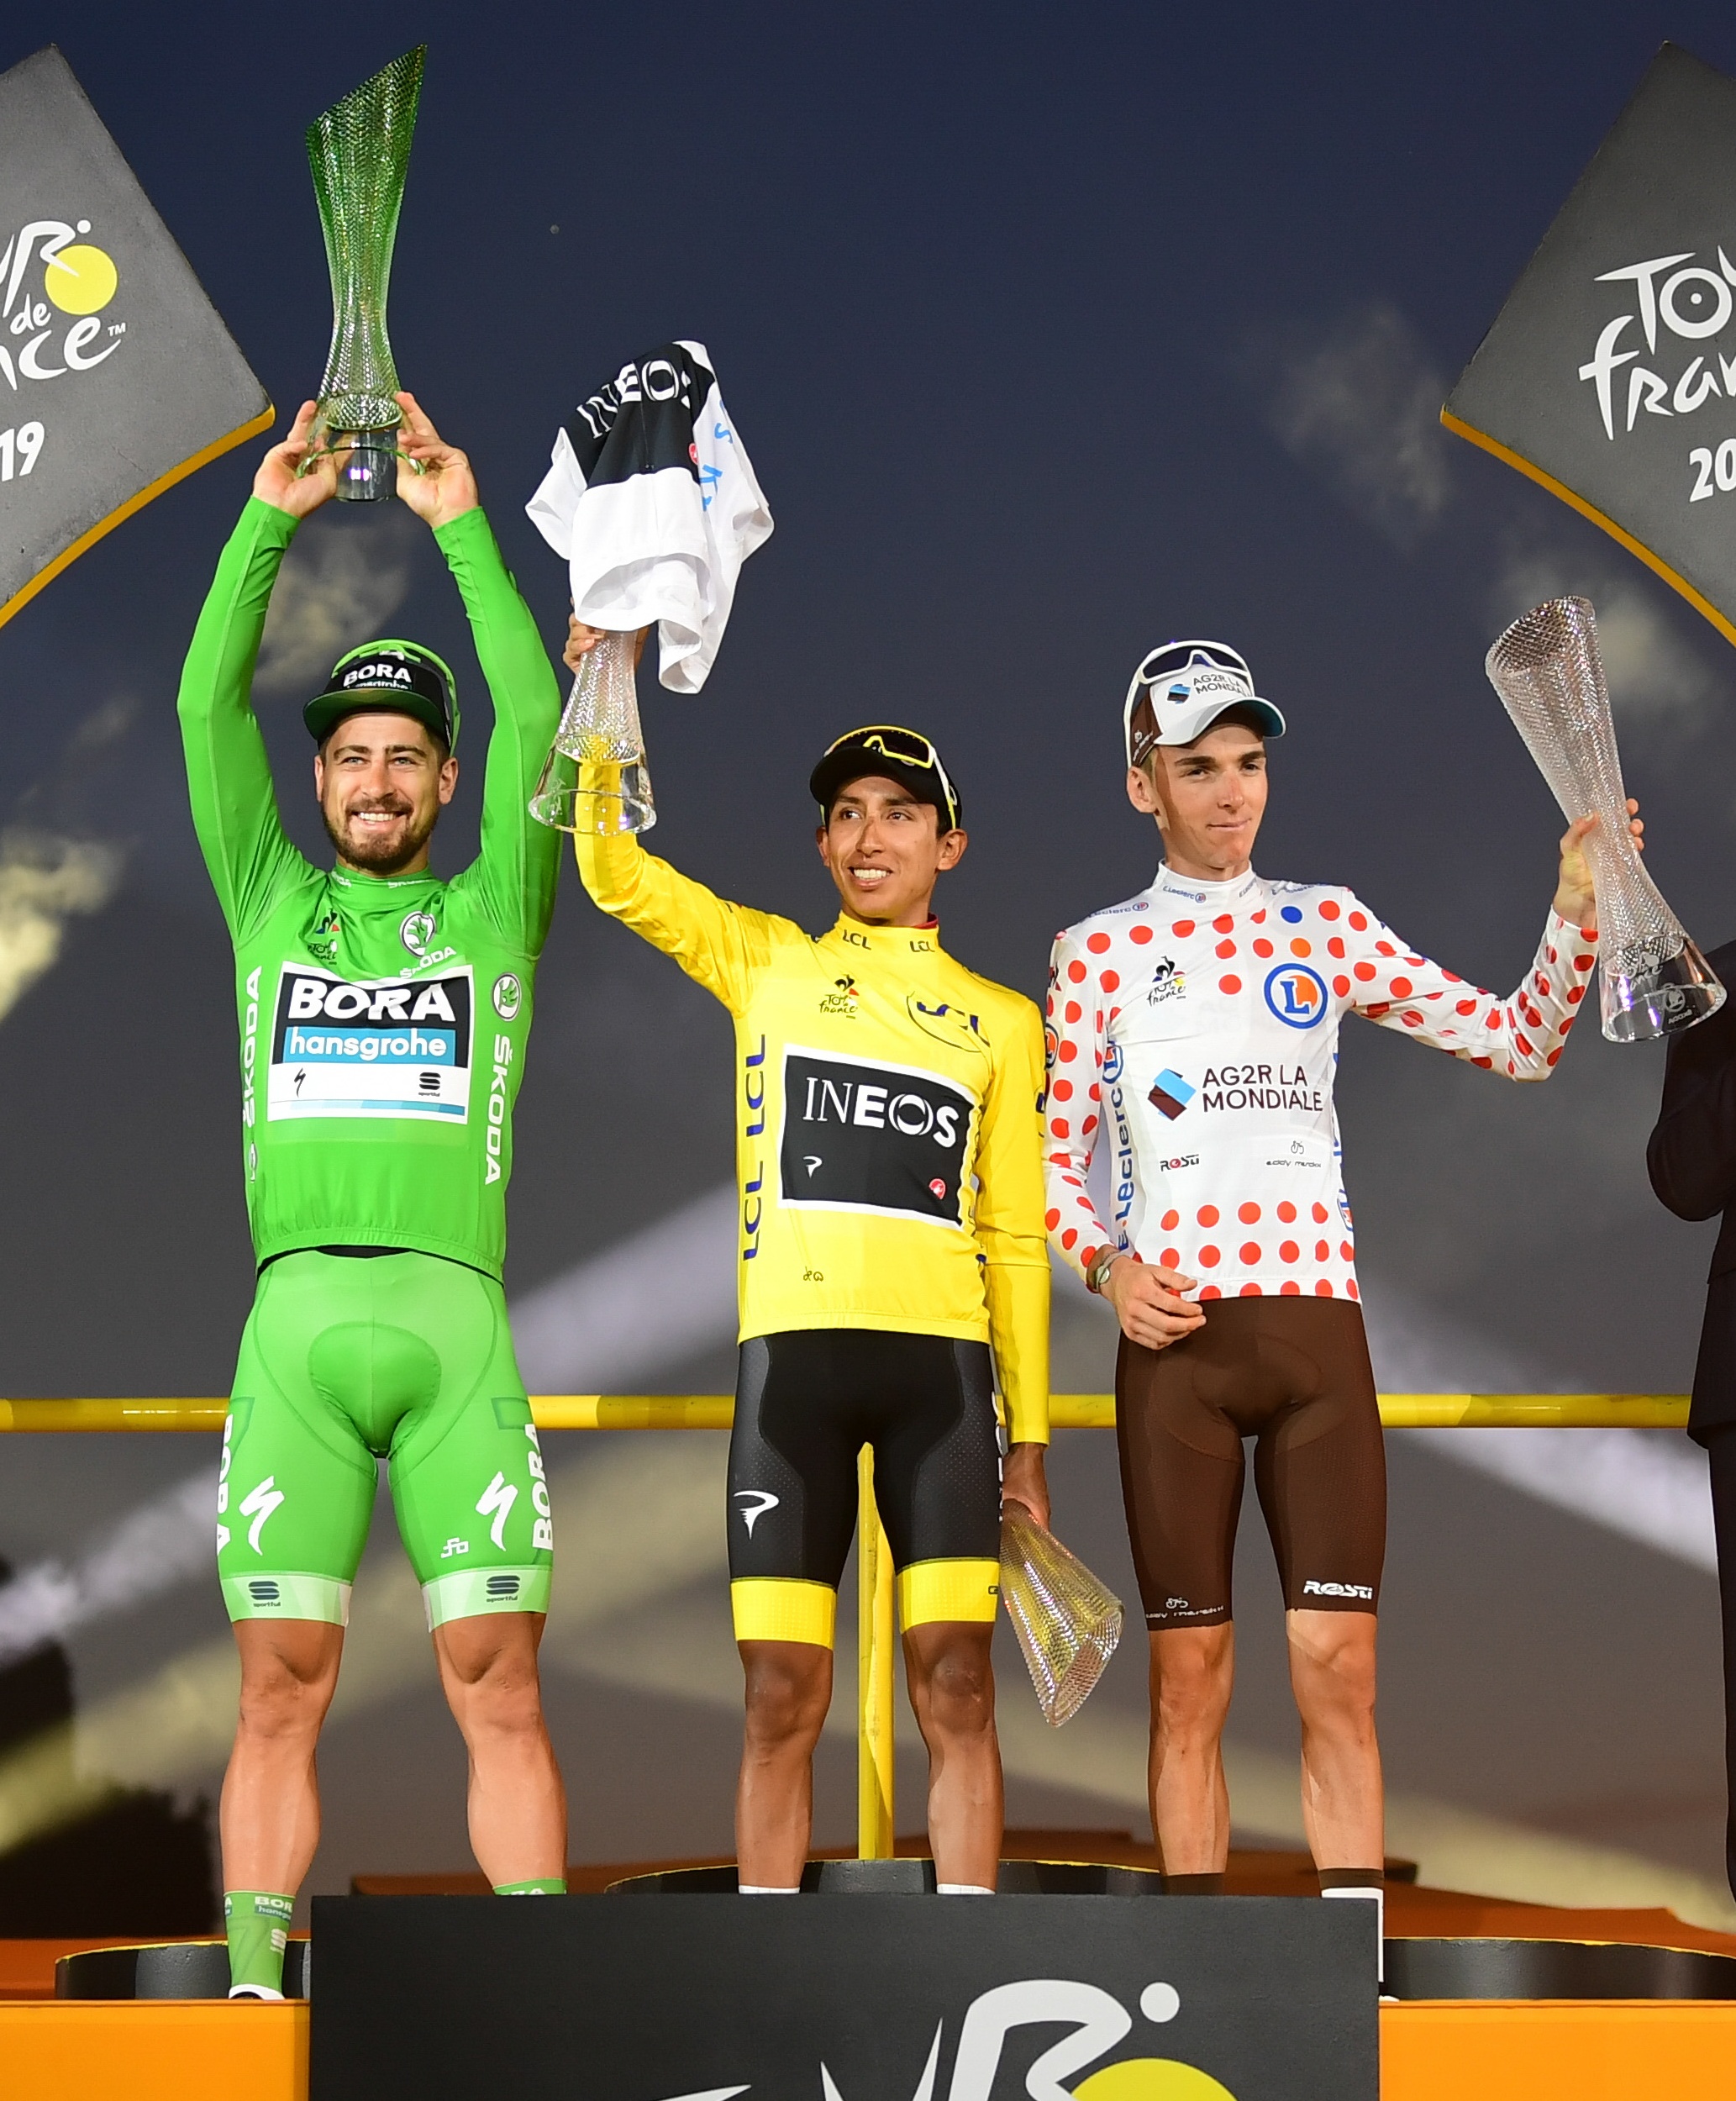 Tour de France winner Egan Bernal celebrates with crystal trophy from